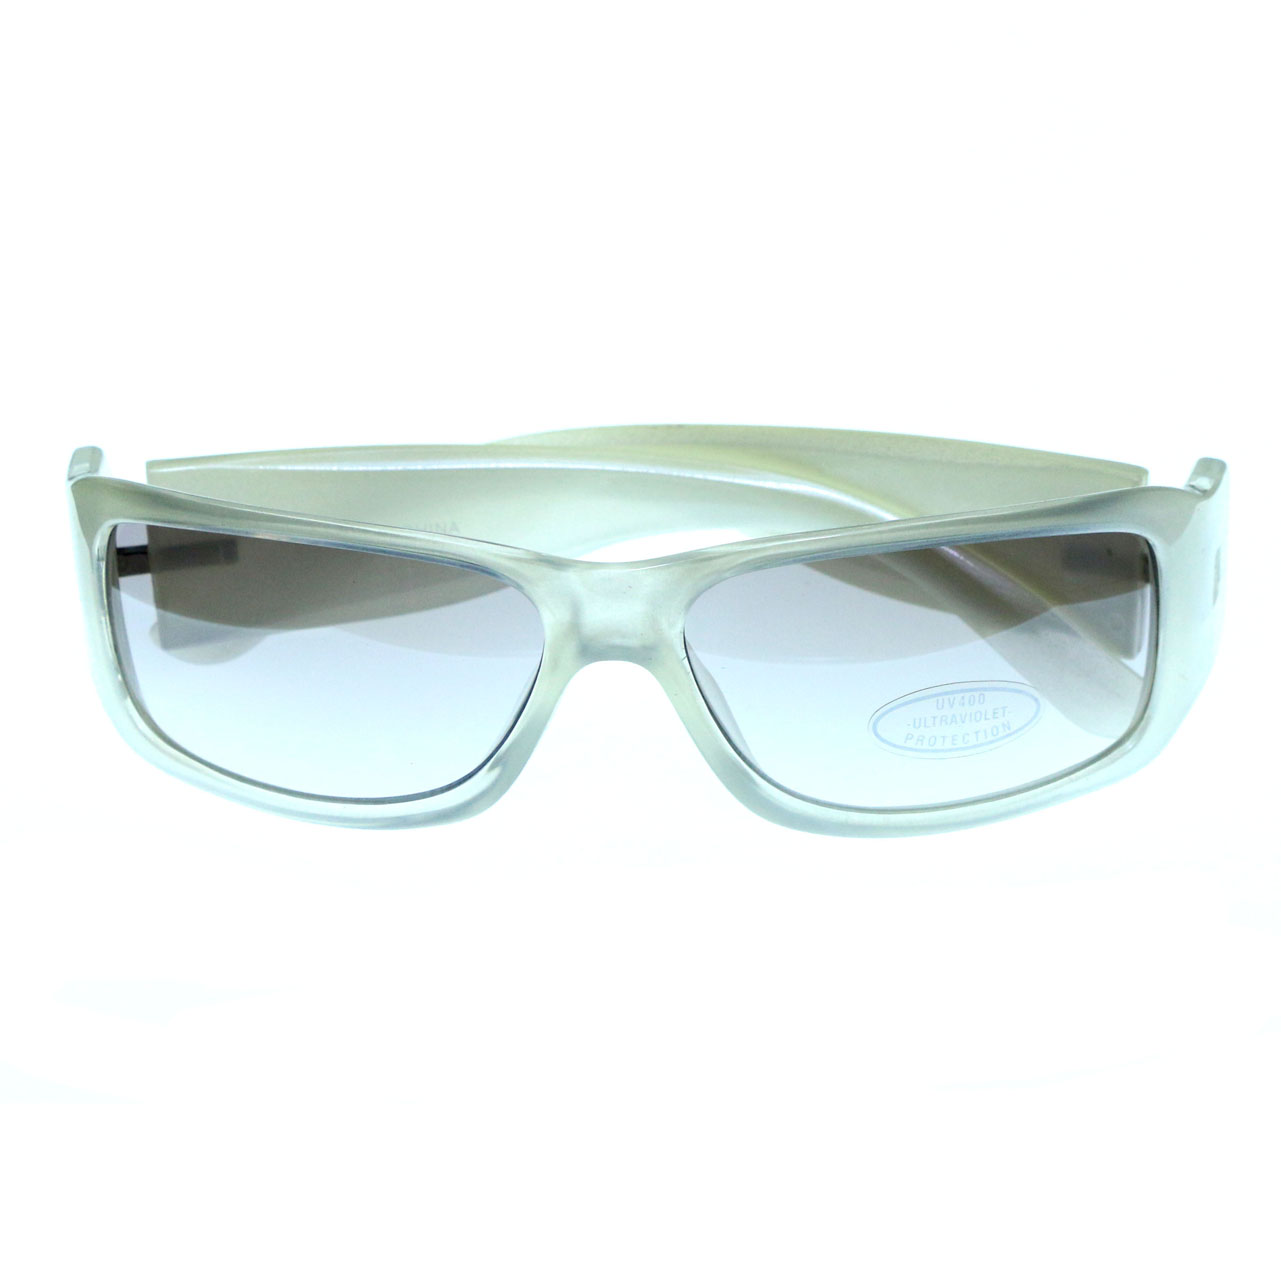 Mi Amore UV protection Sport-Sunglasses White Frame/Gray Lens - image 2 of 2